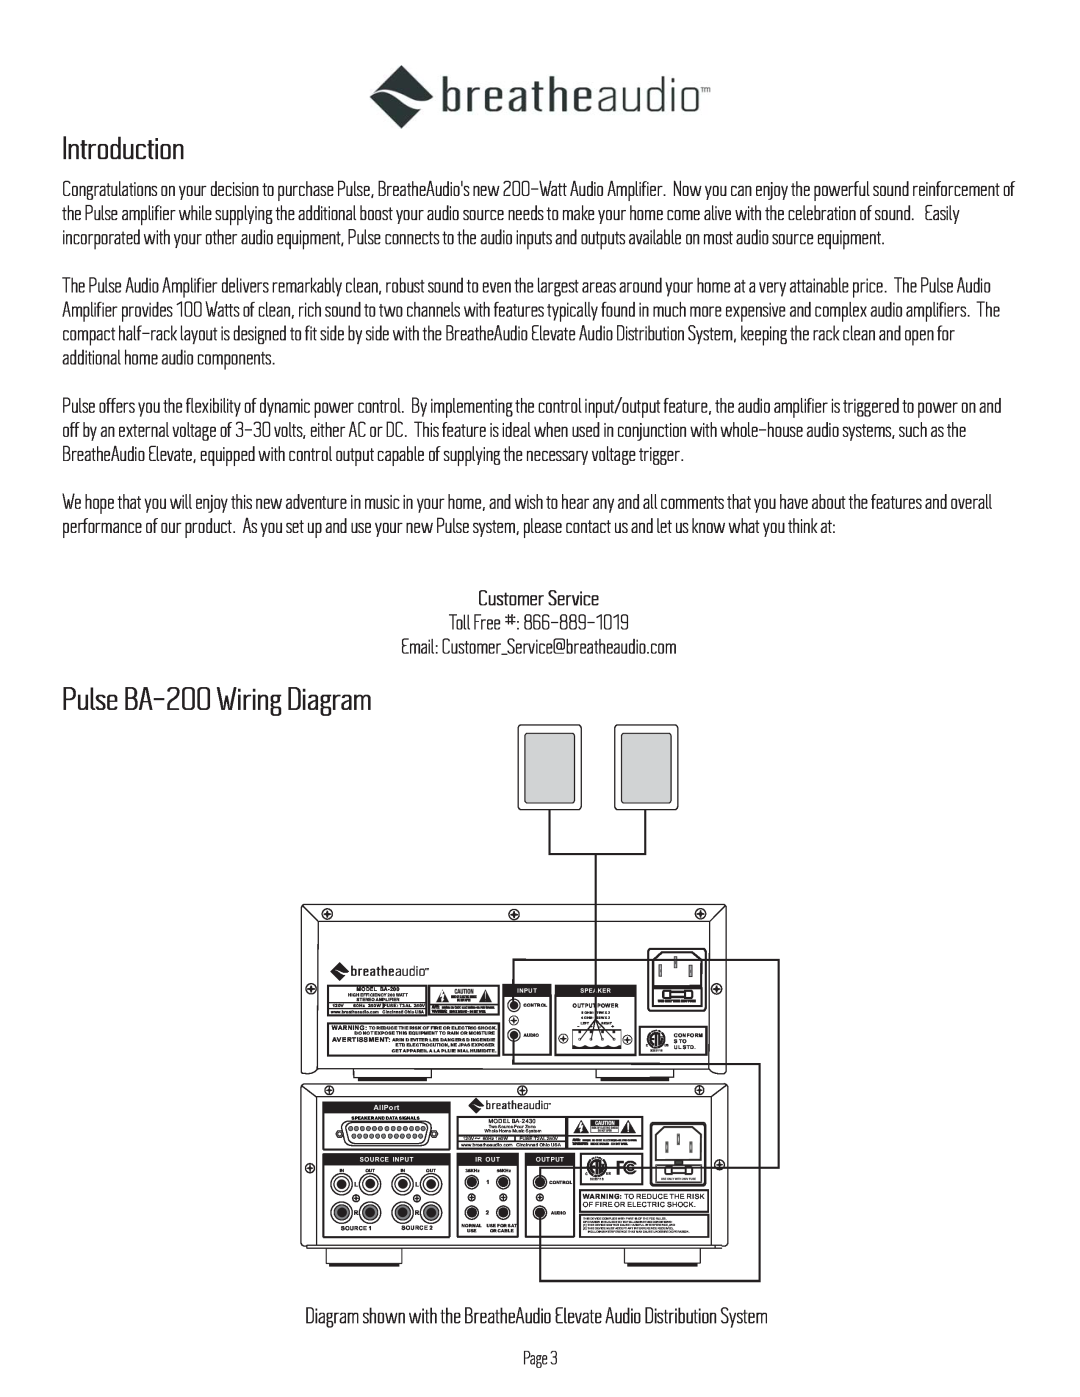 BreatheAudio owner manual Introduction, Pulse BA-200Wiring Diagram, Customer Service 